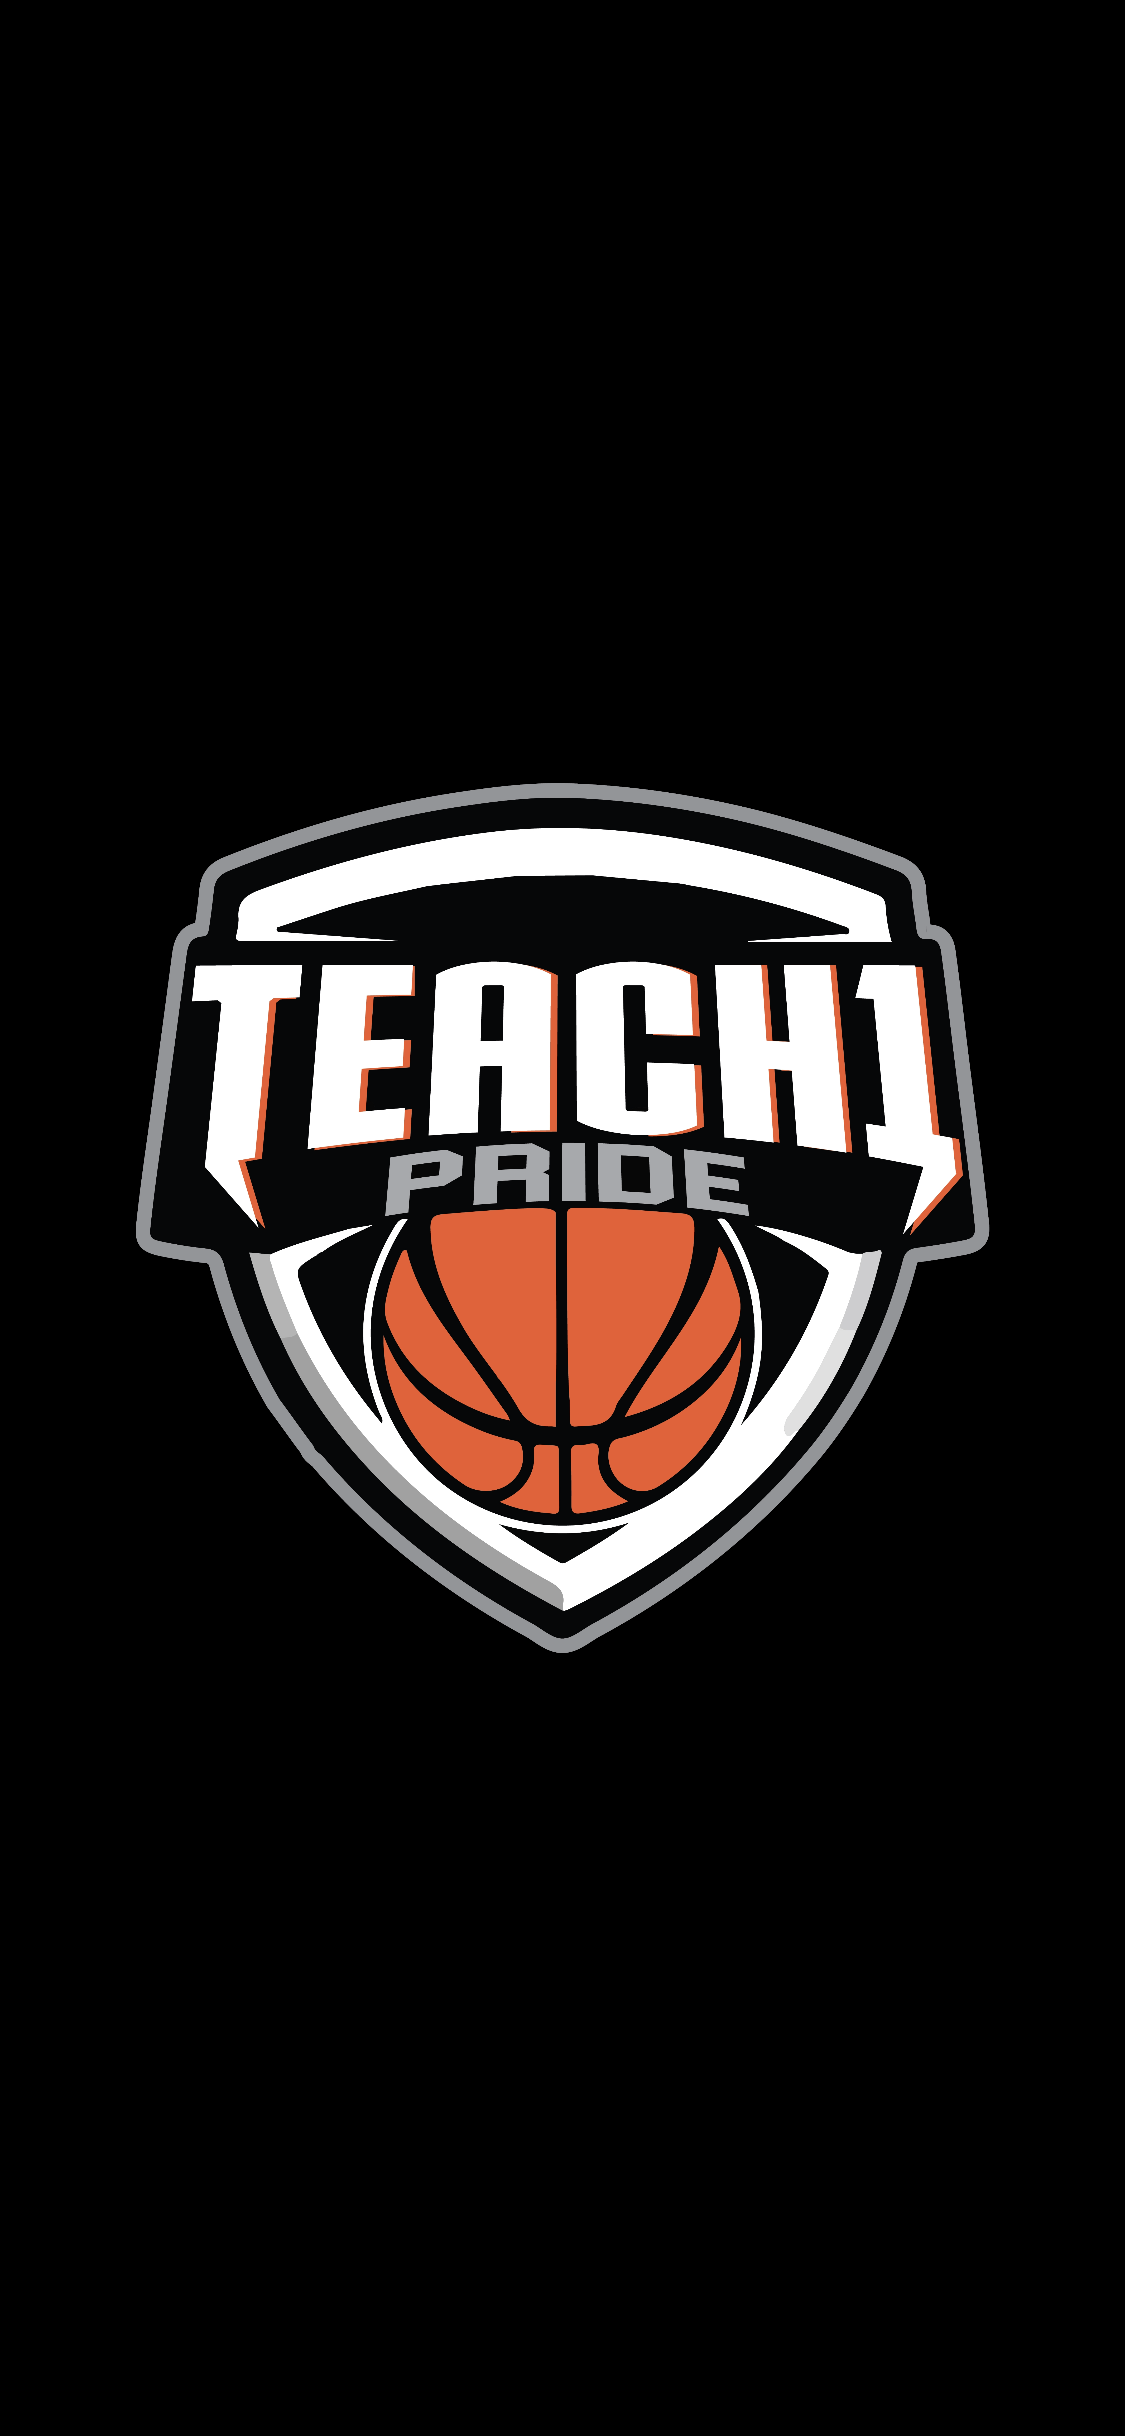 Teach1Pride